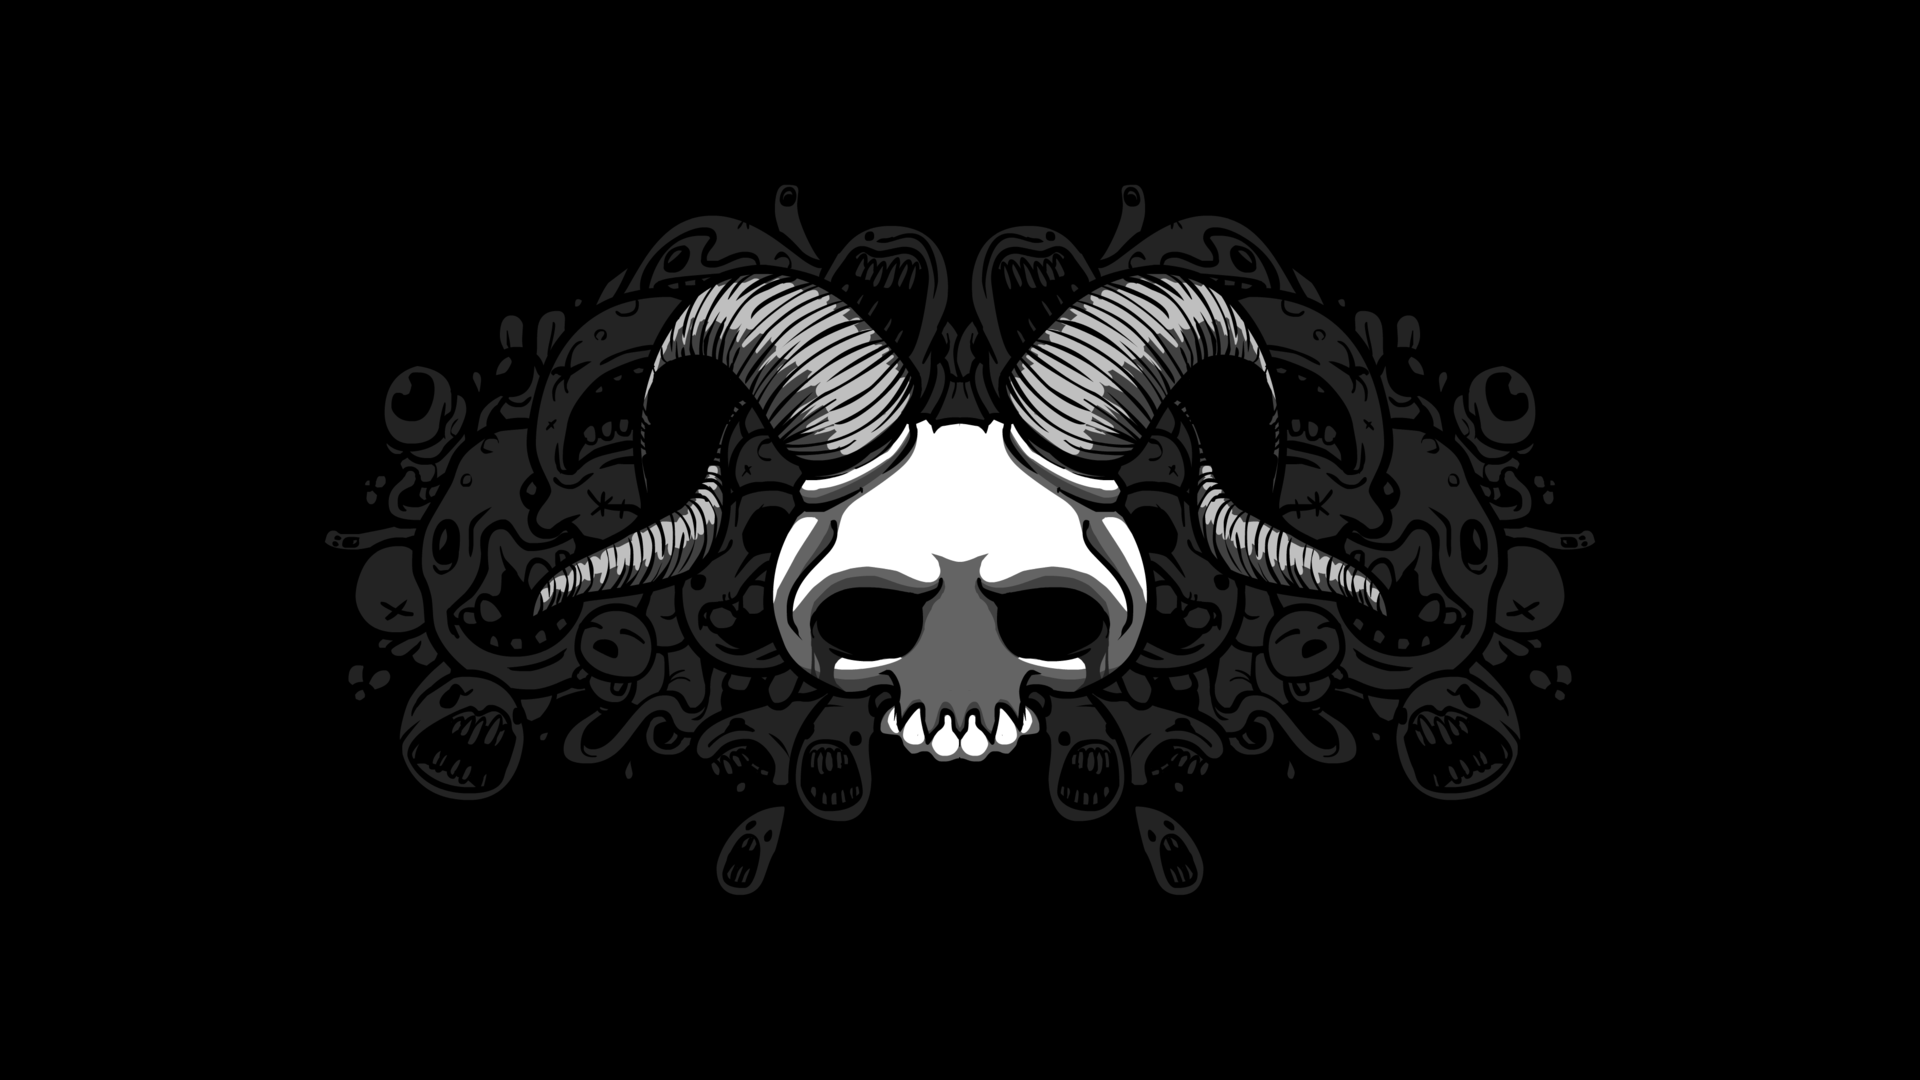 General 1920x1080 The Binding of Isaac black skull dark horns monochrome